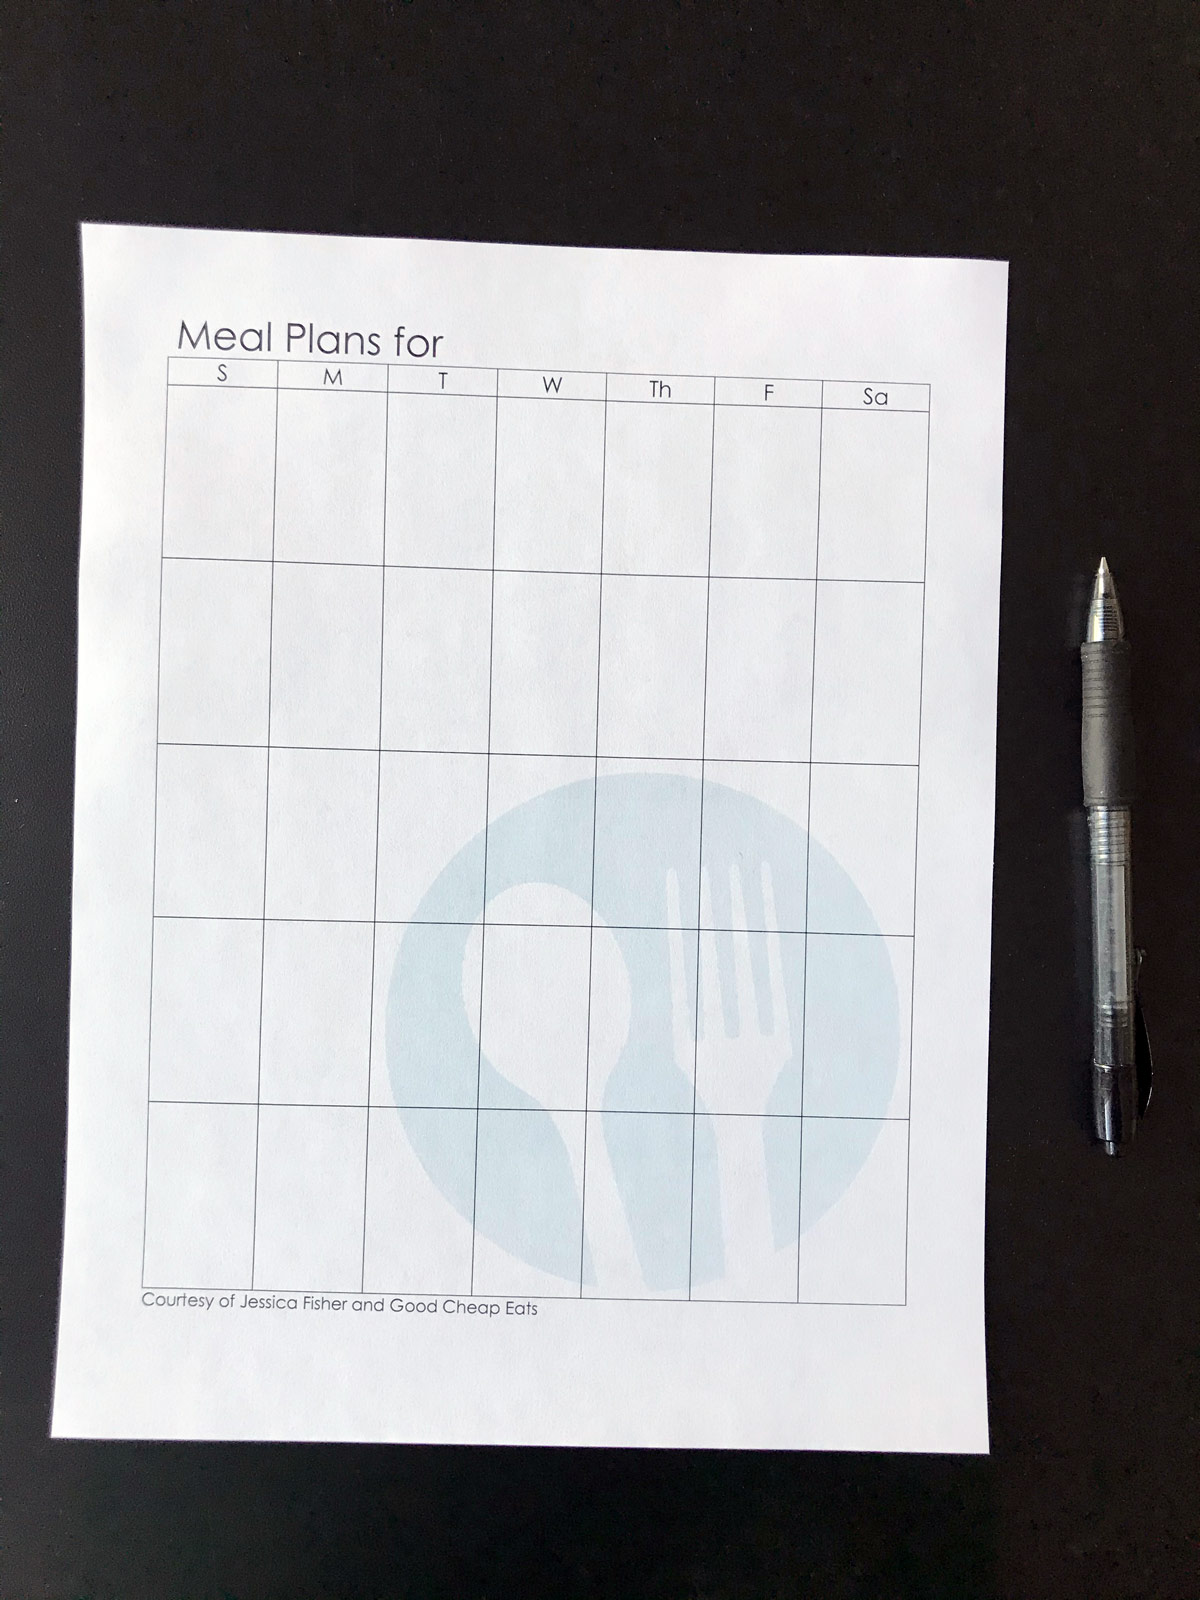 blank meal plan calendar printed on white paper.